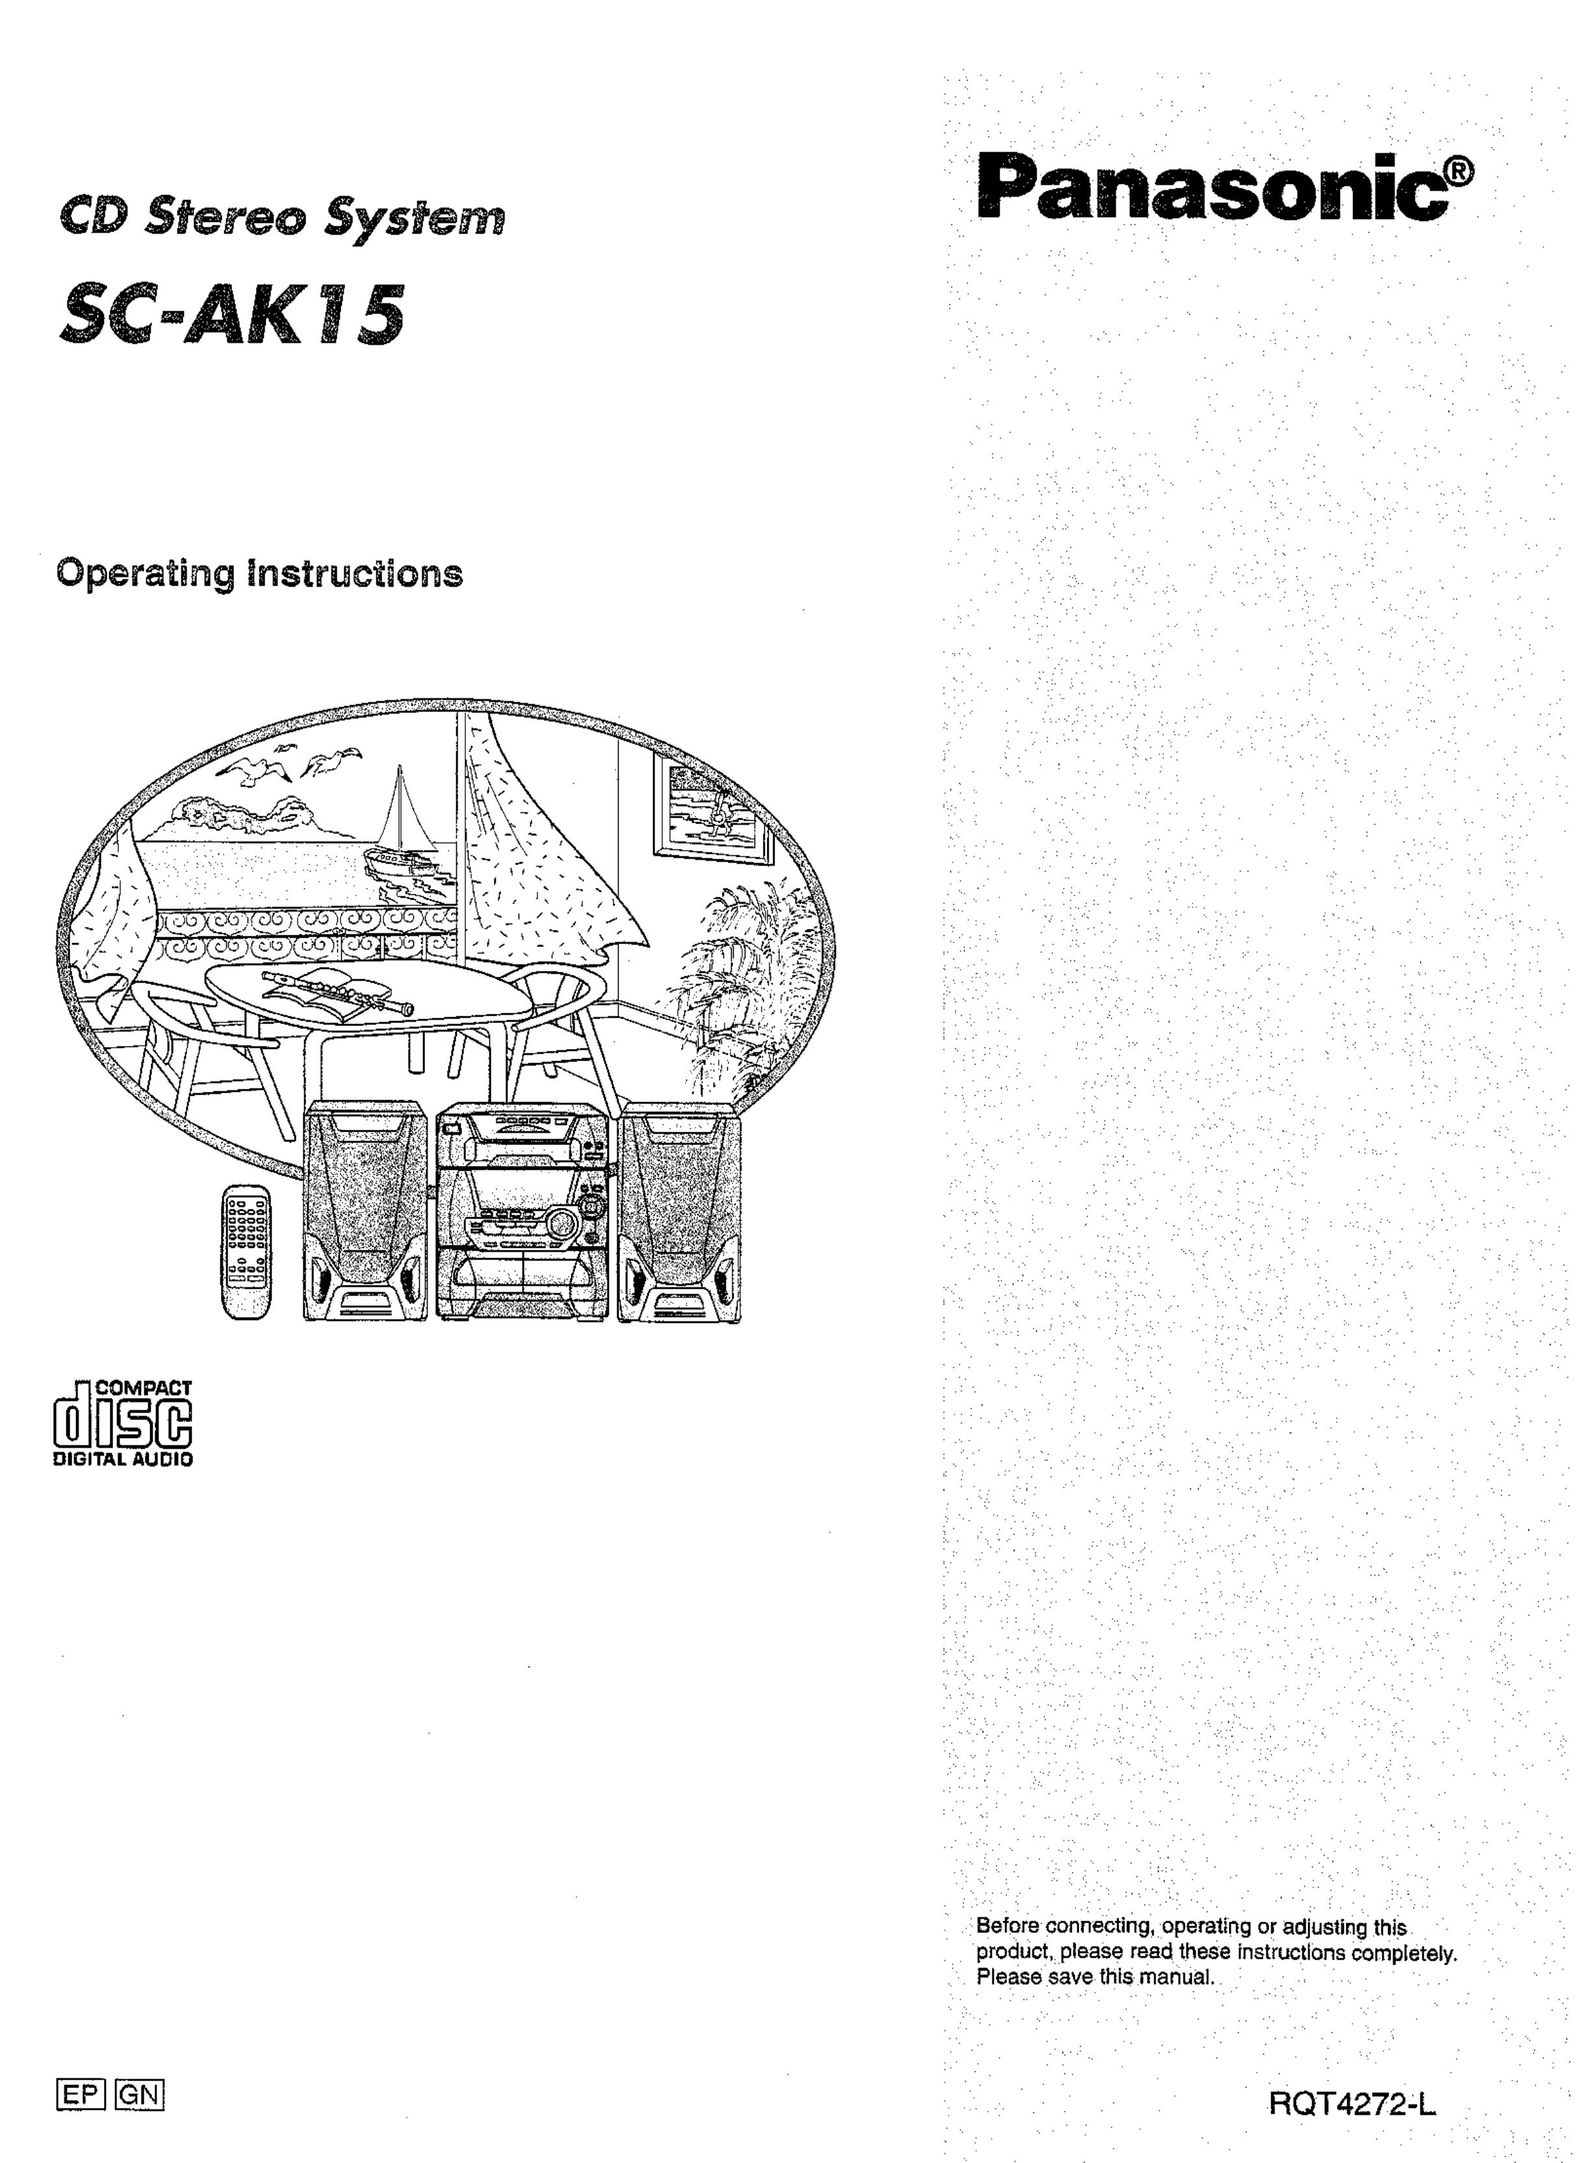 Panasonic SC-AK15 Stereo System User Manual